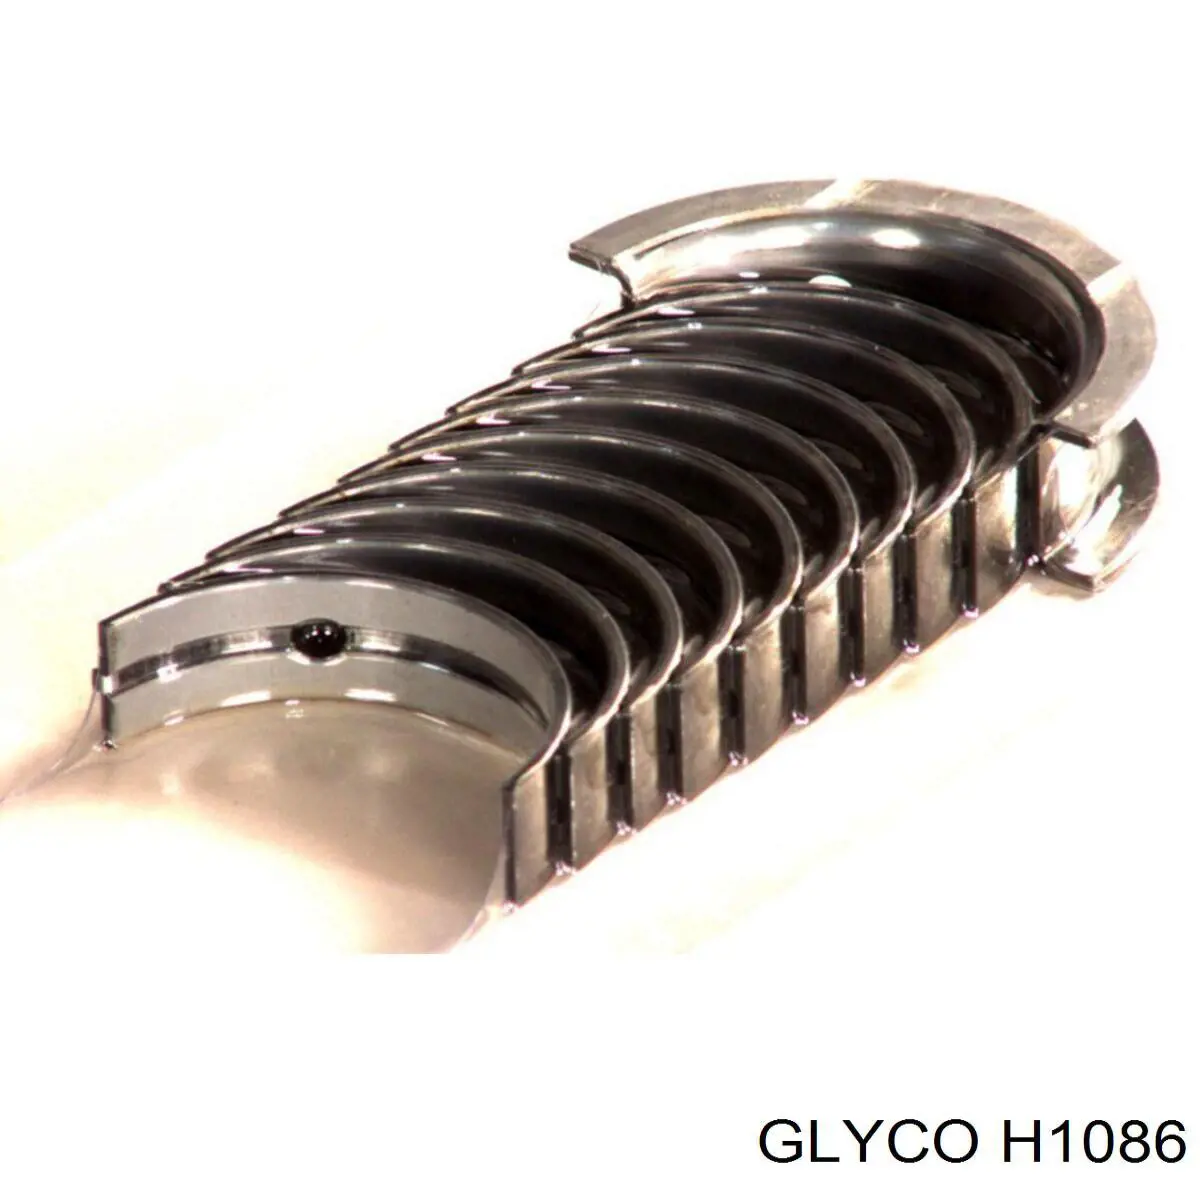 H1086 Glyco вкладыши коленвала коренные, комплект, стандарт (std)